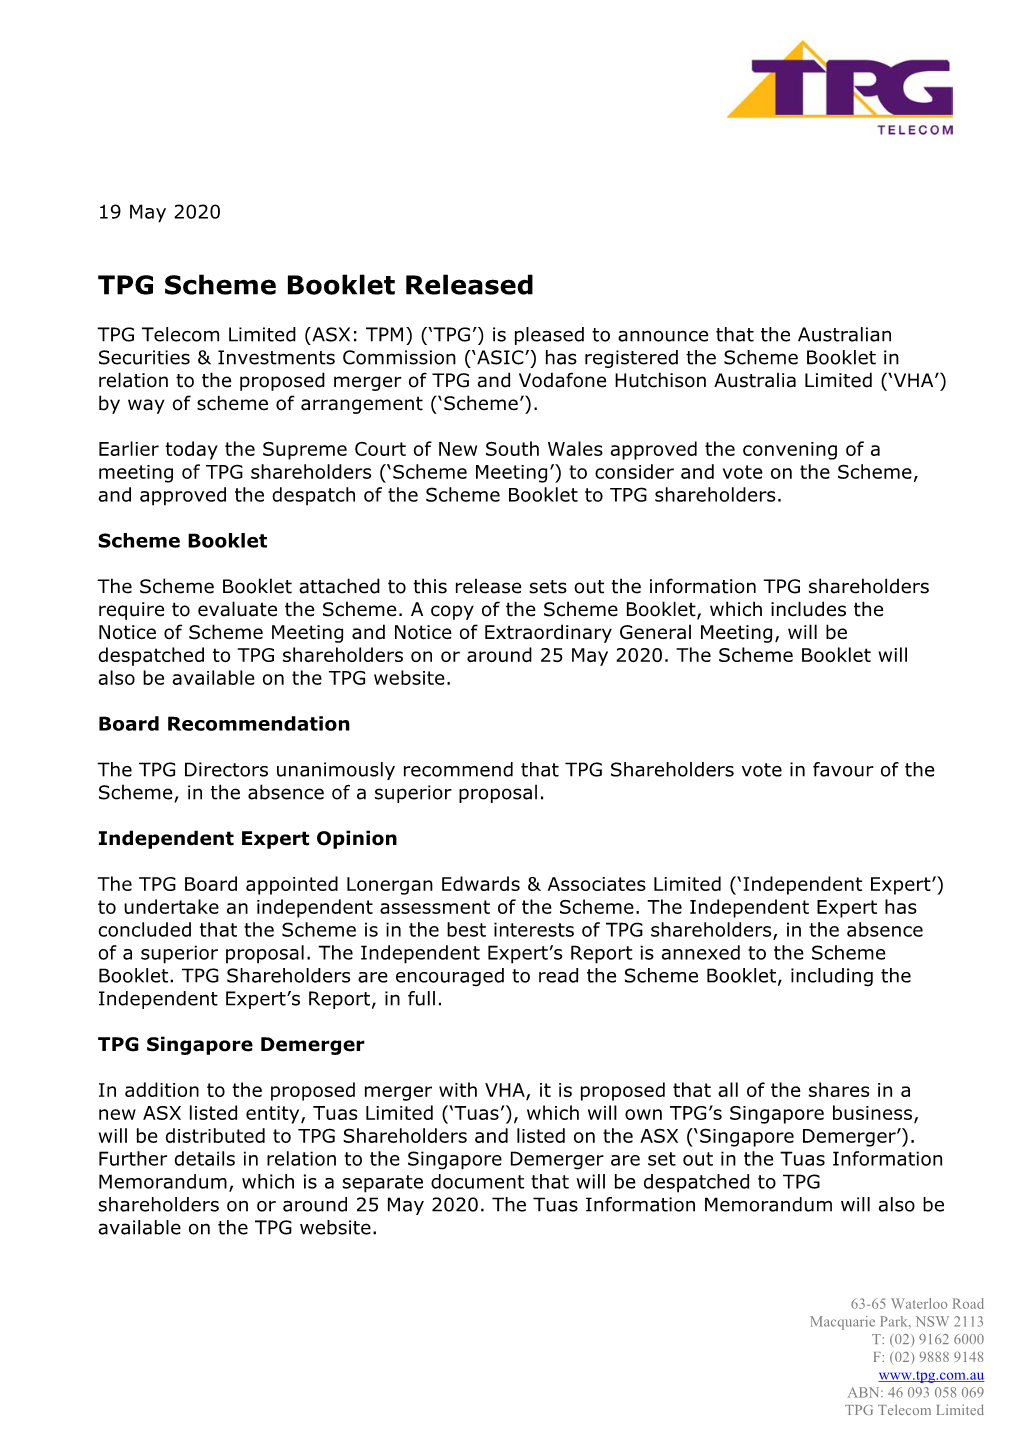 TPG Scheme Booklet Released